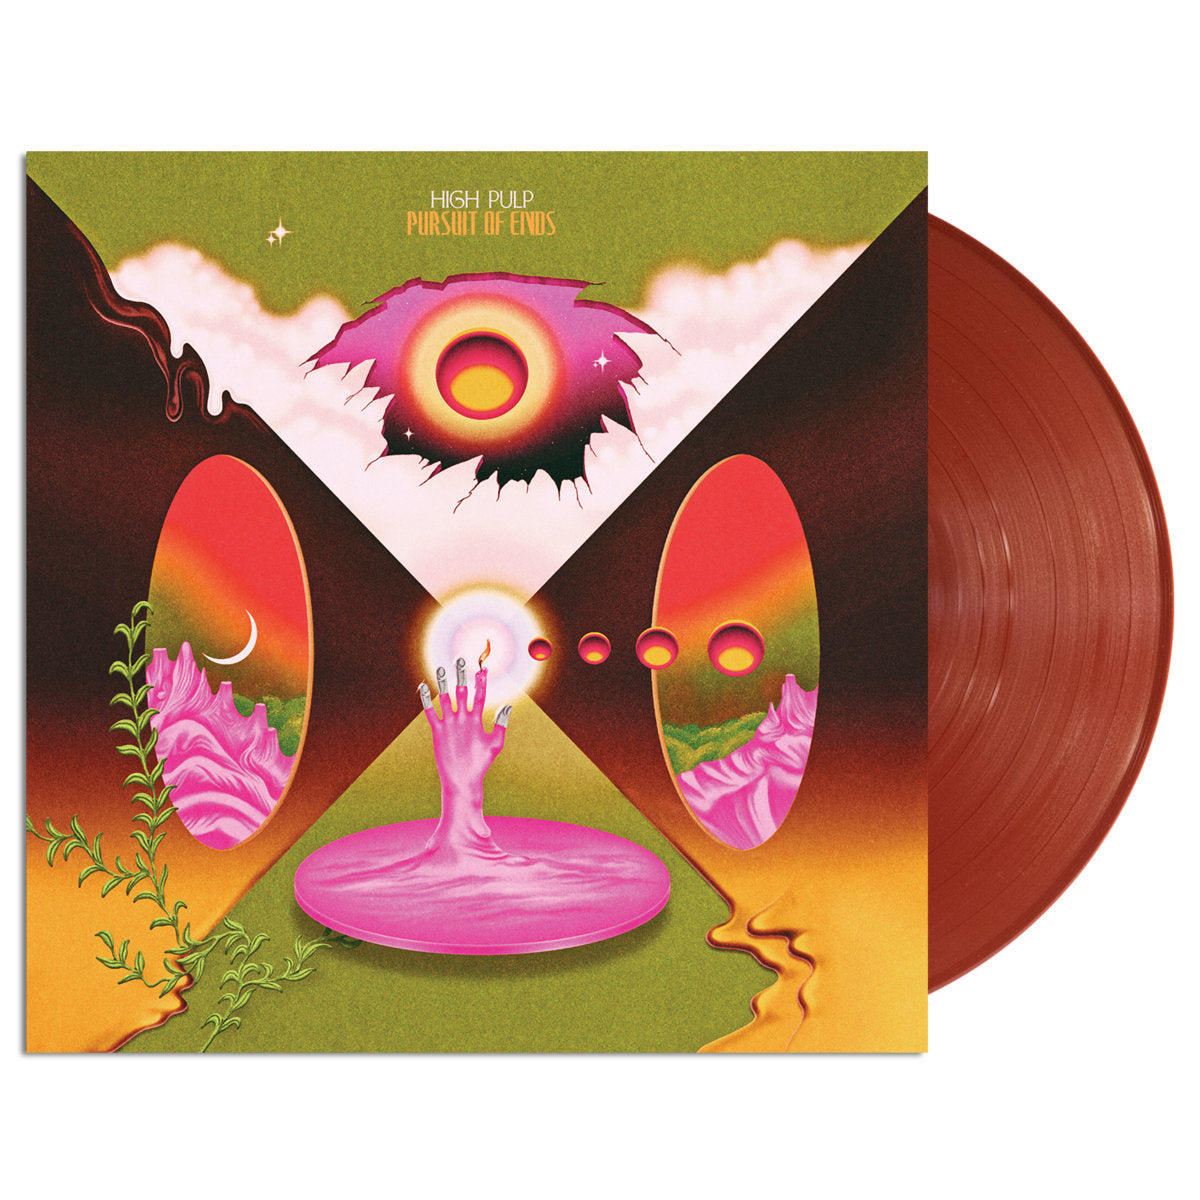 High Pulp - Pursuit of Ends LP (Indie Exclusive Colored Vinyl)